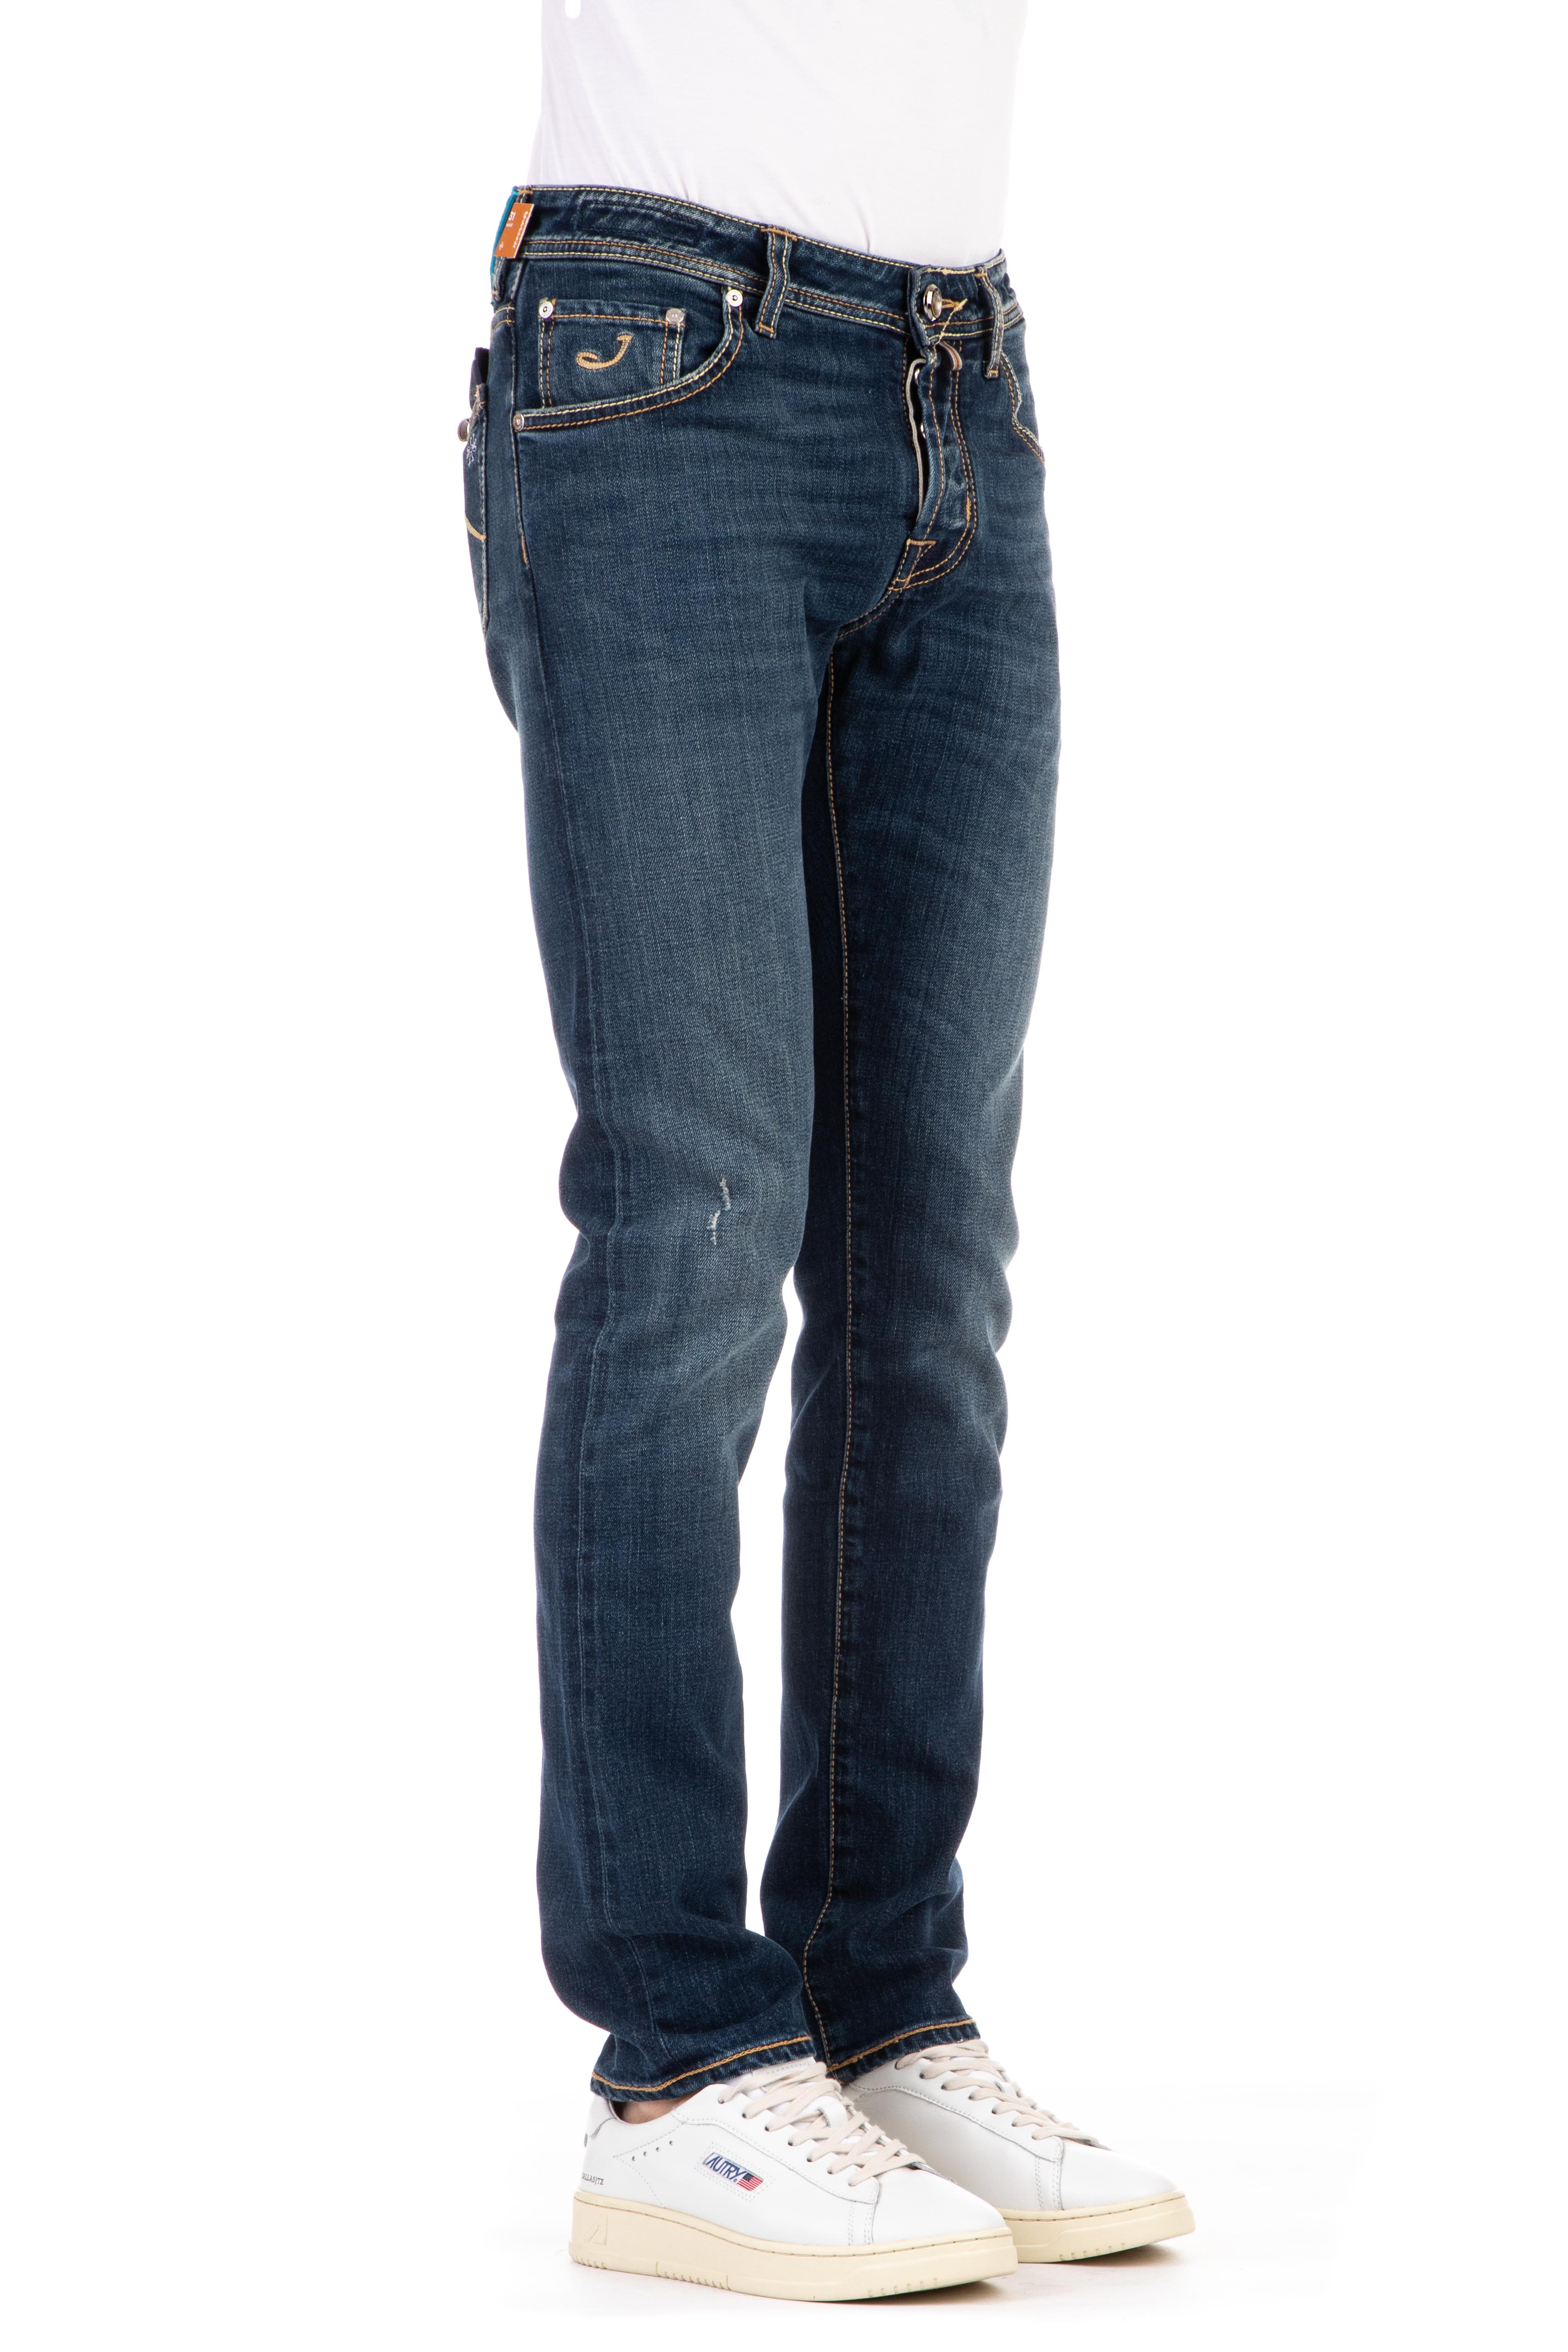 Jeans limited edition etichetta azzurranick fit